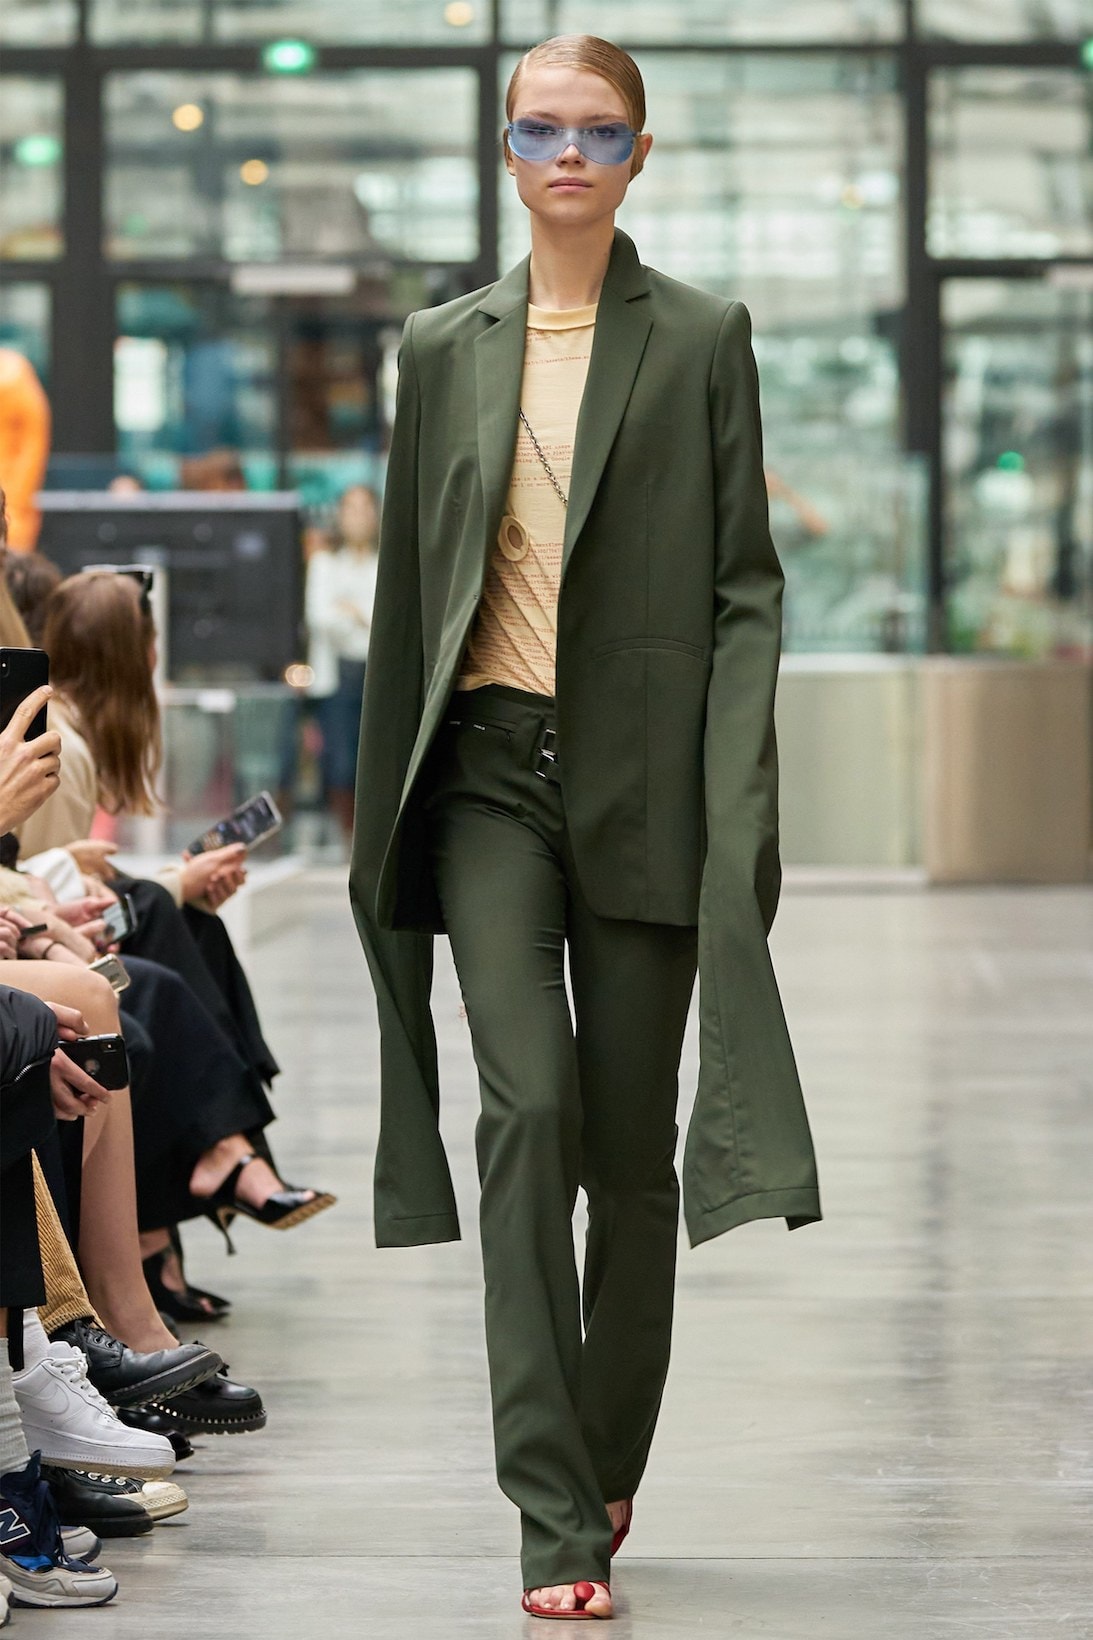 coperni sebastien meyer arnaud vaillant paris fashion week fall winter collection olive green jacket pants